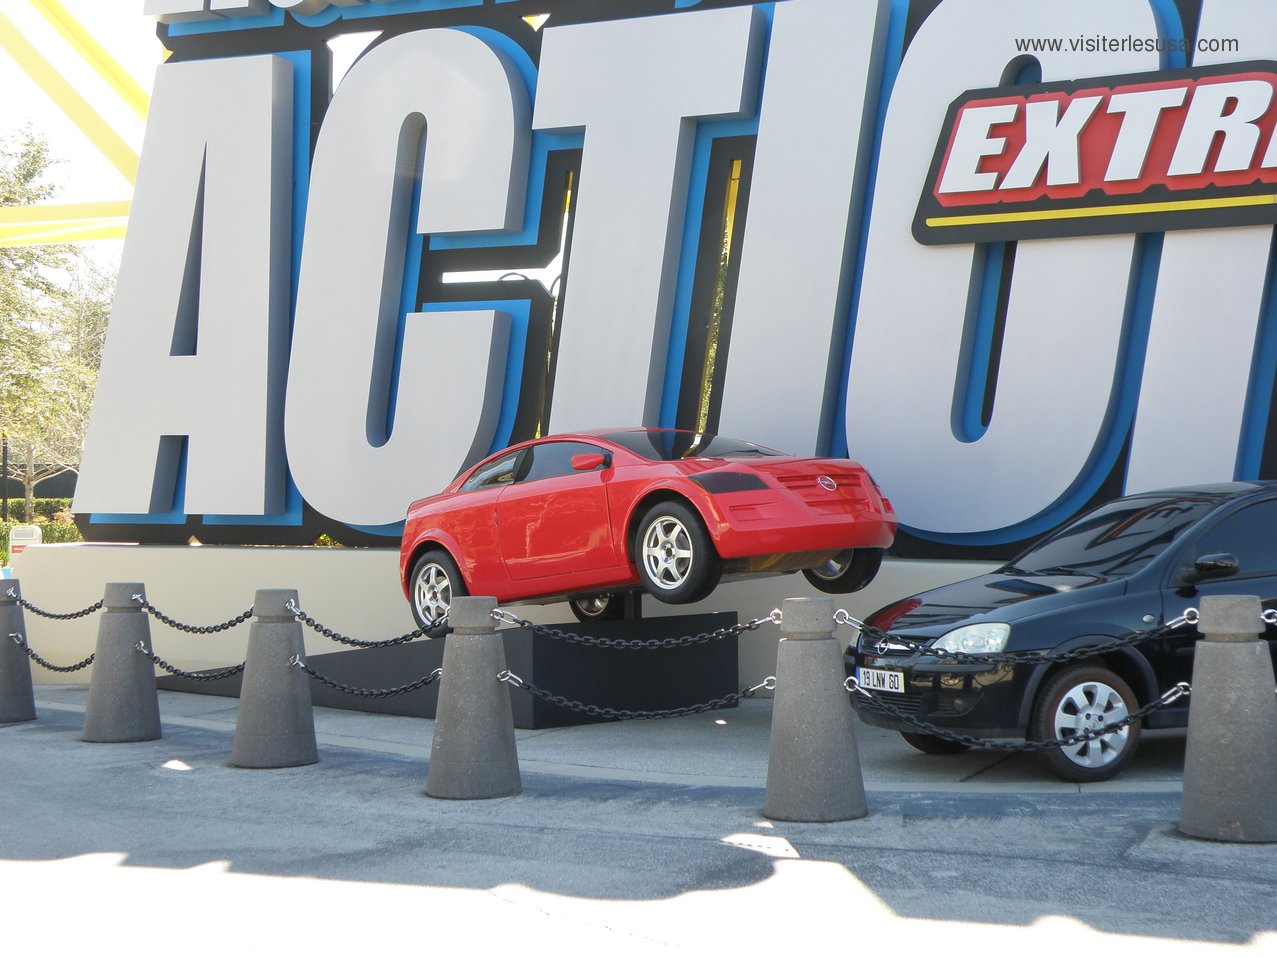 Lights, Motors, Action!® Extreme Stunt Show®